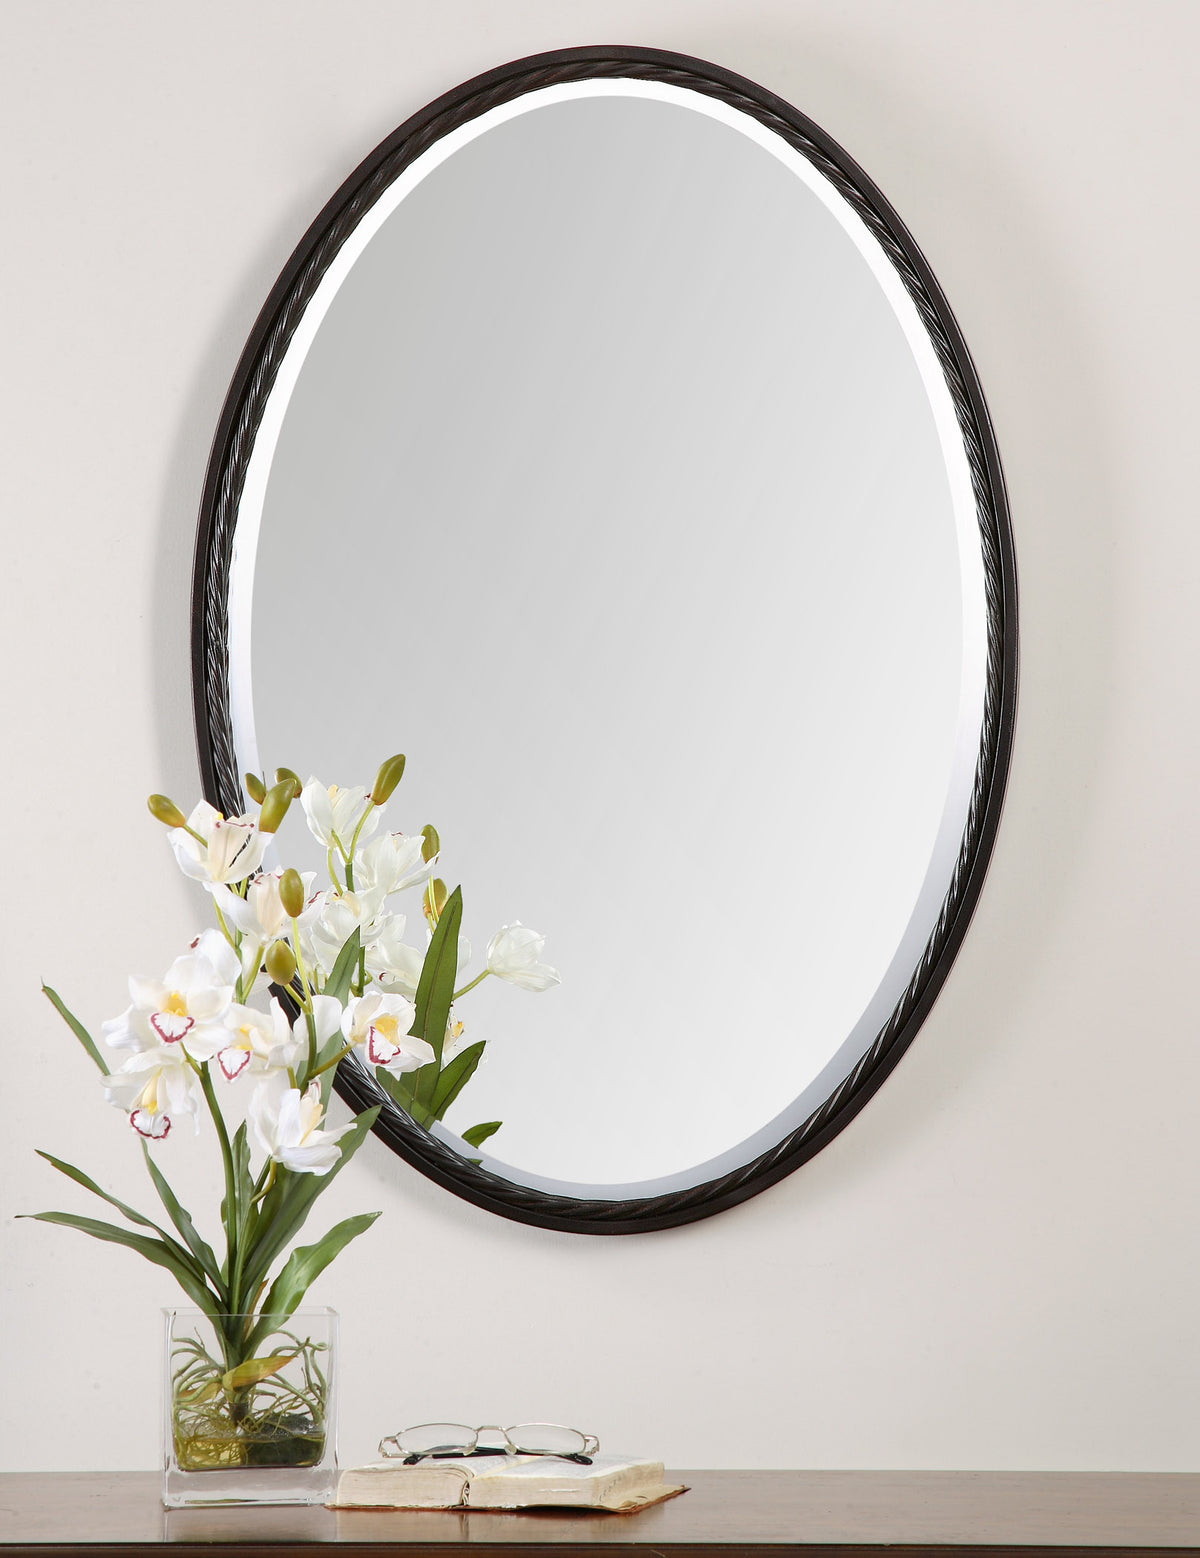 Uttermost Casalina Oil Rubbed Bronze Oval Mirror